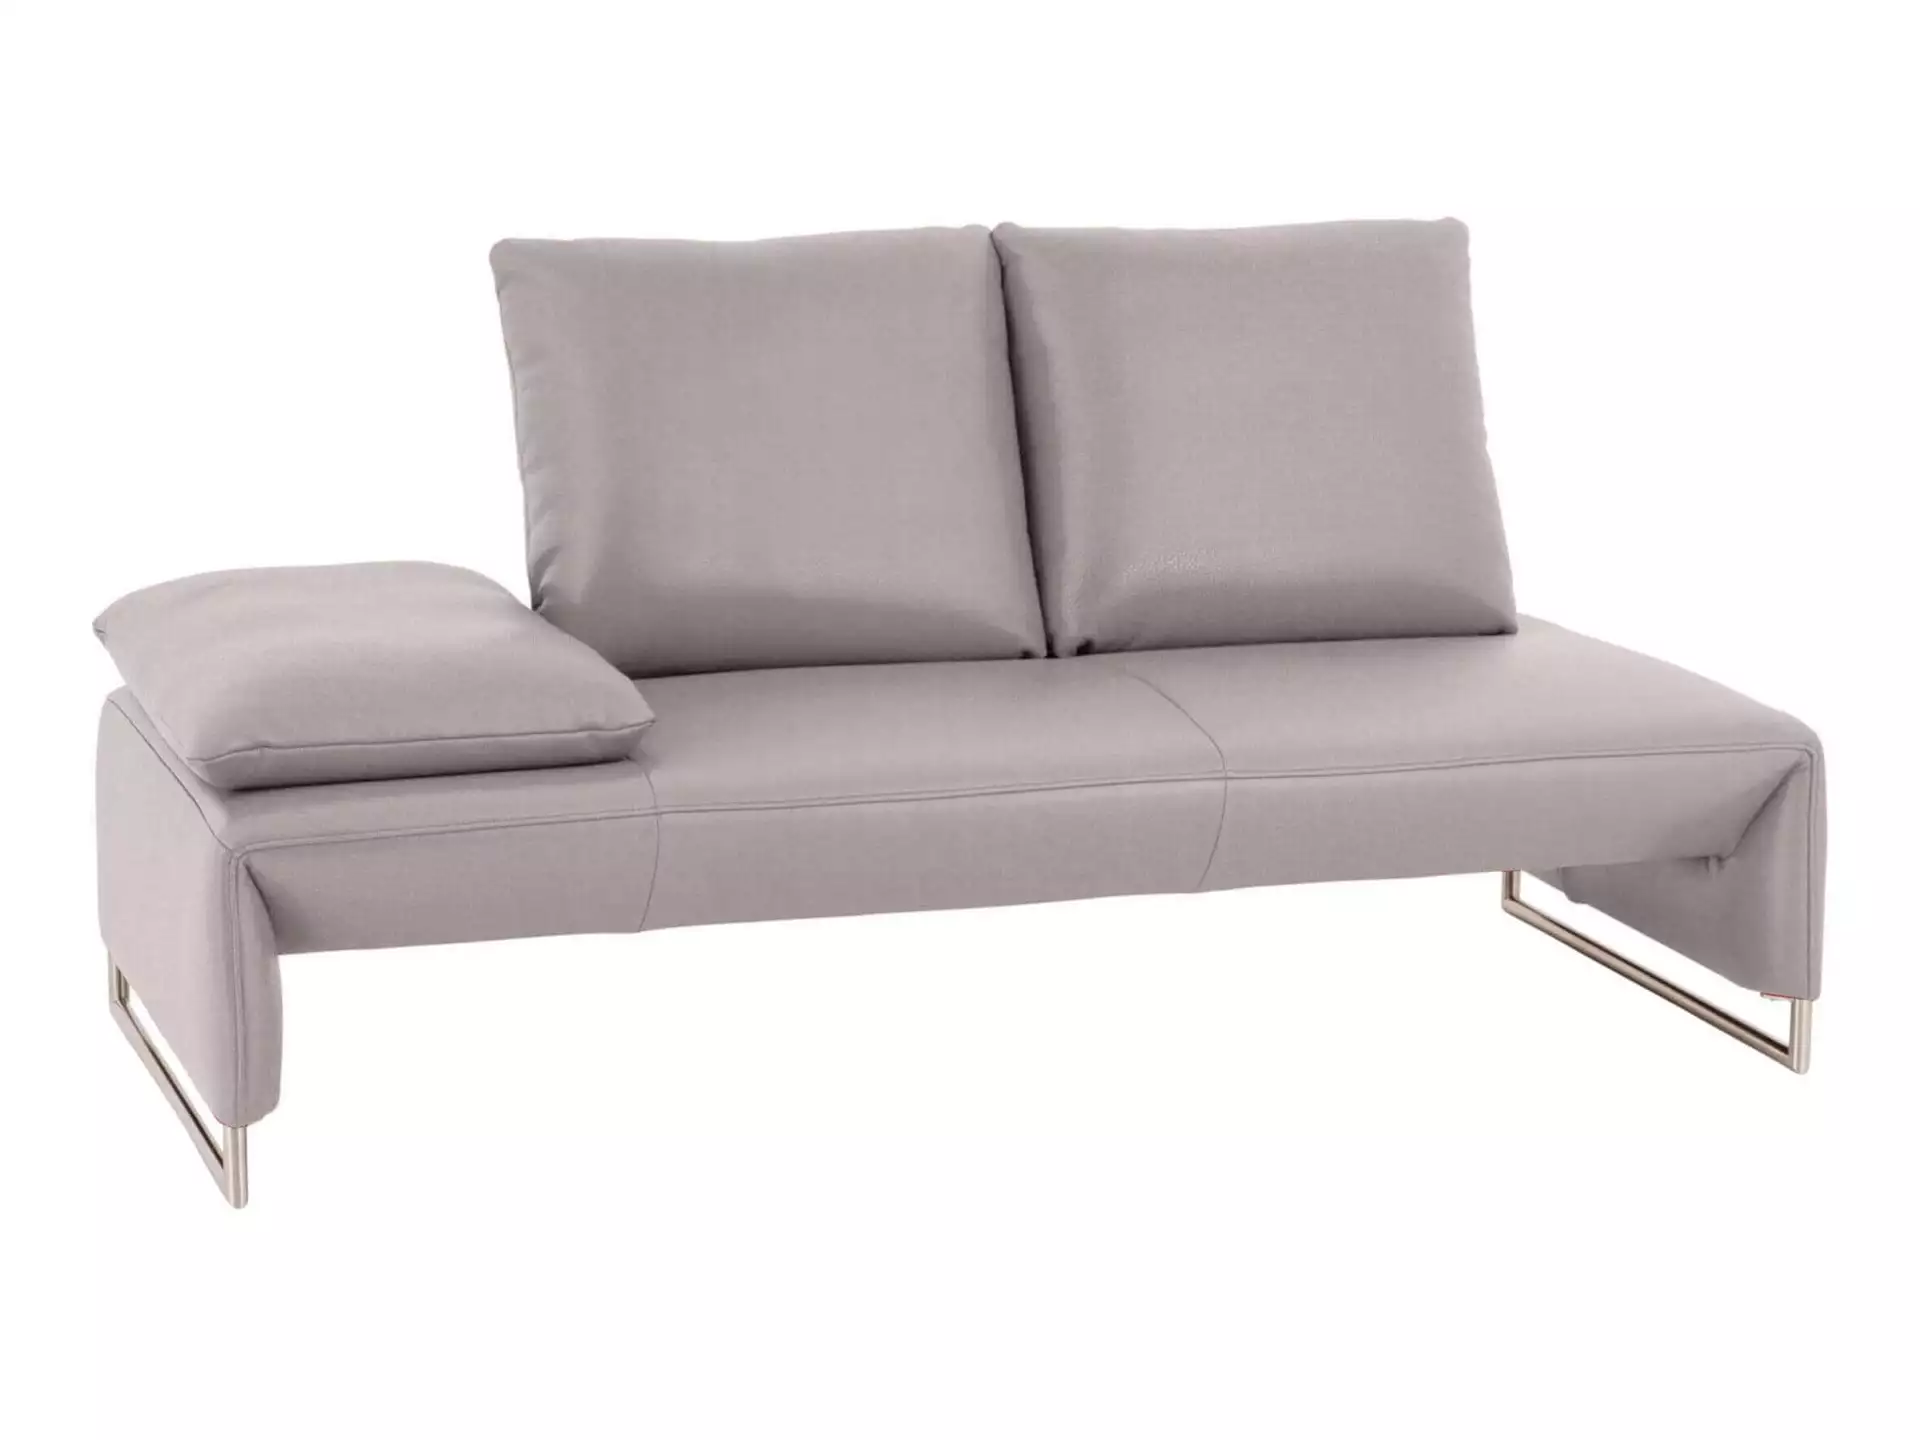 Sofa Ramano Basic B: 180 cm Koinor / Farbe: Grau / Material: Stoff Basic